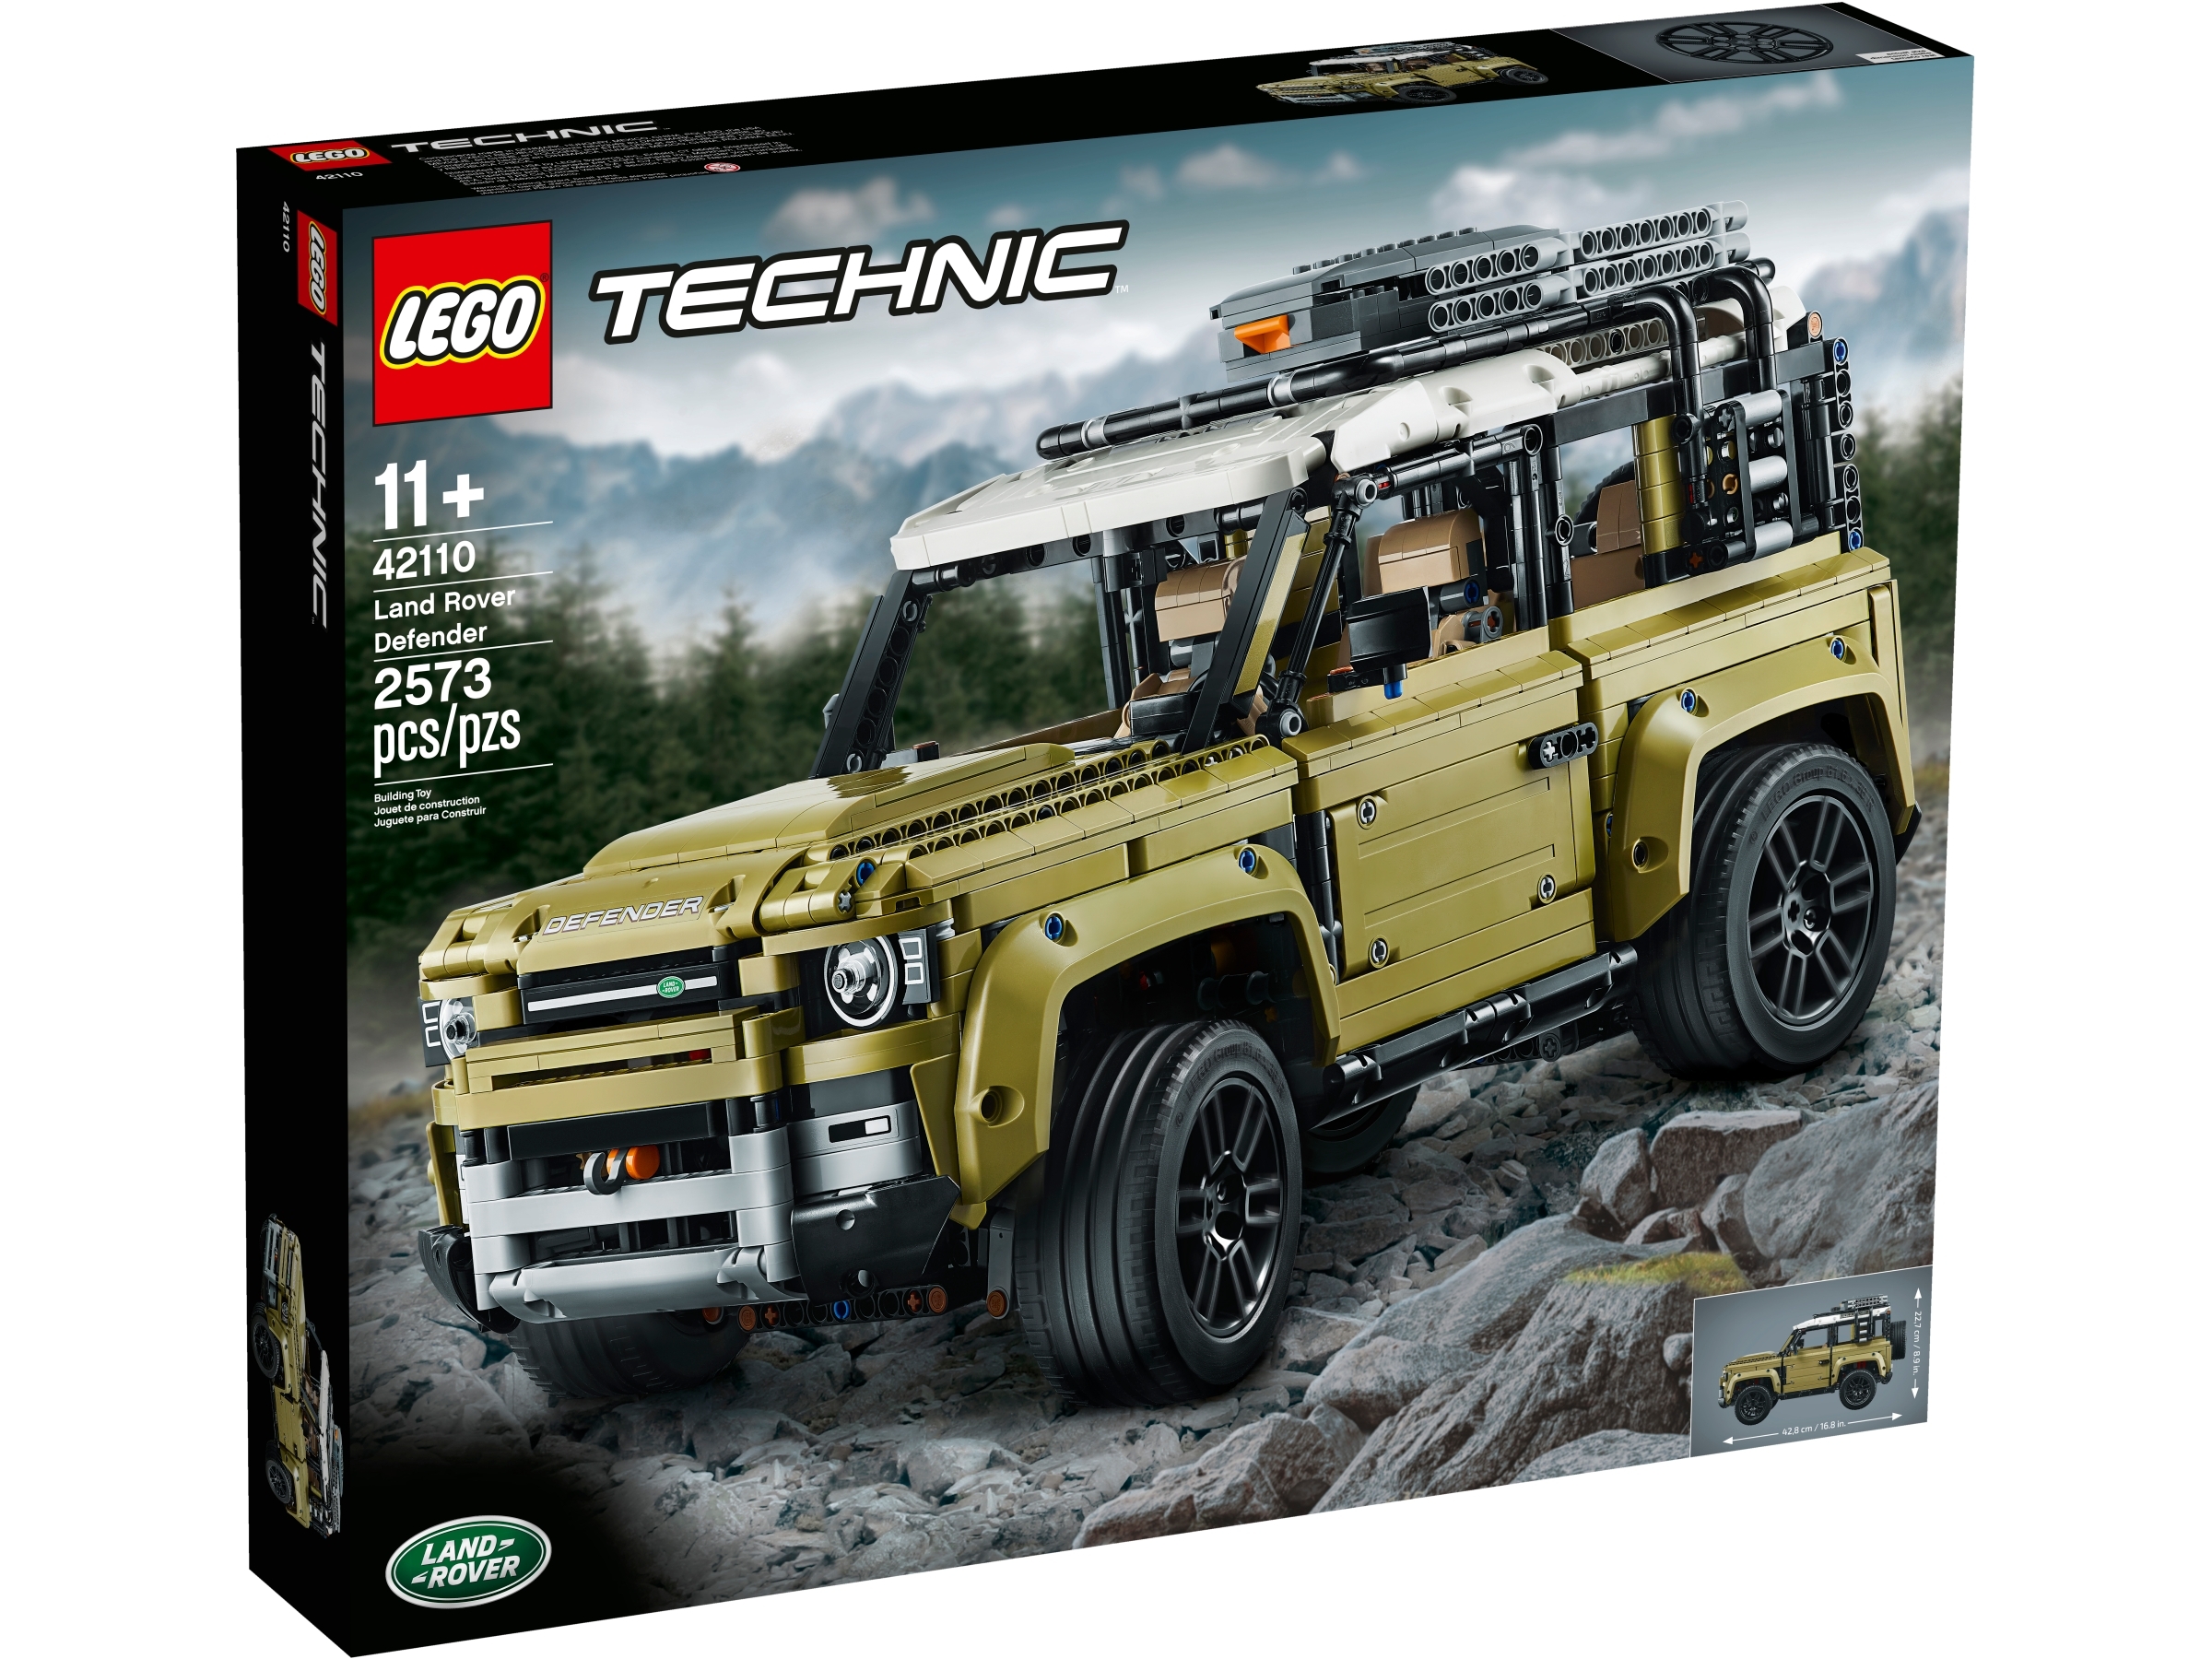 Kit de Luz LED sólo para Lego 42110 Technic Land Rover Defender Coche ladrillo Juguete E D 